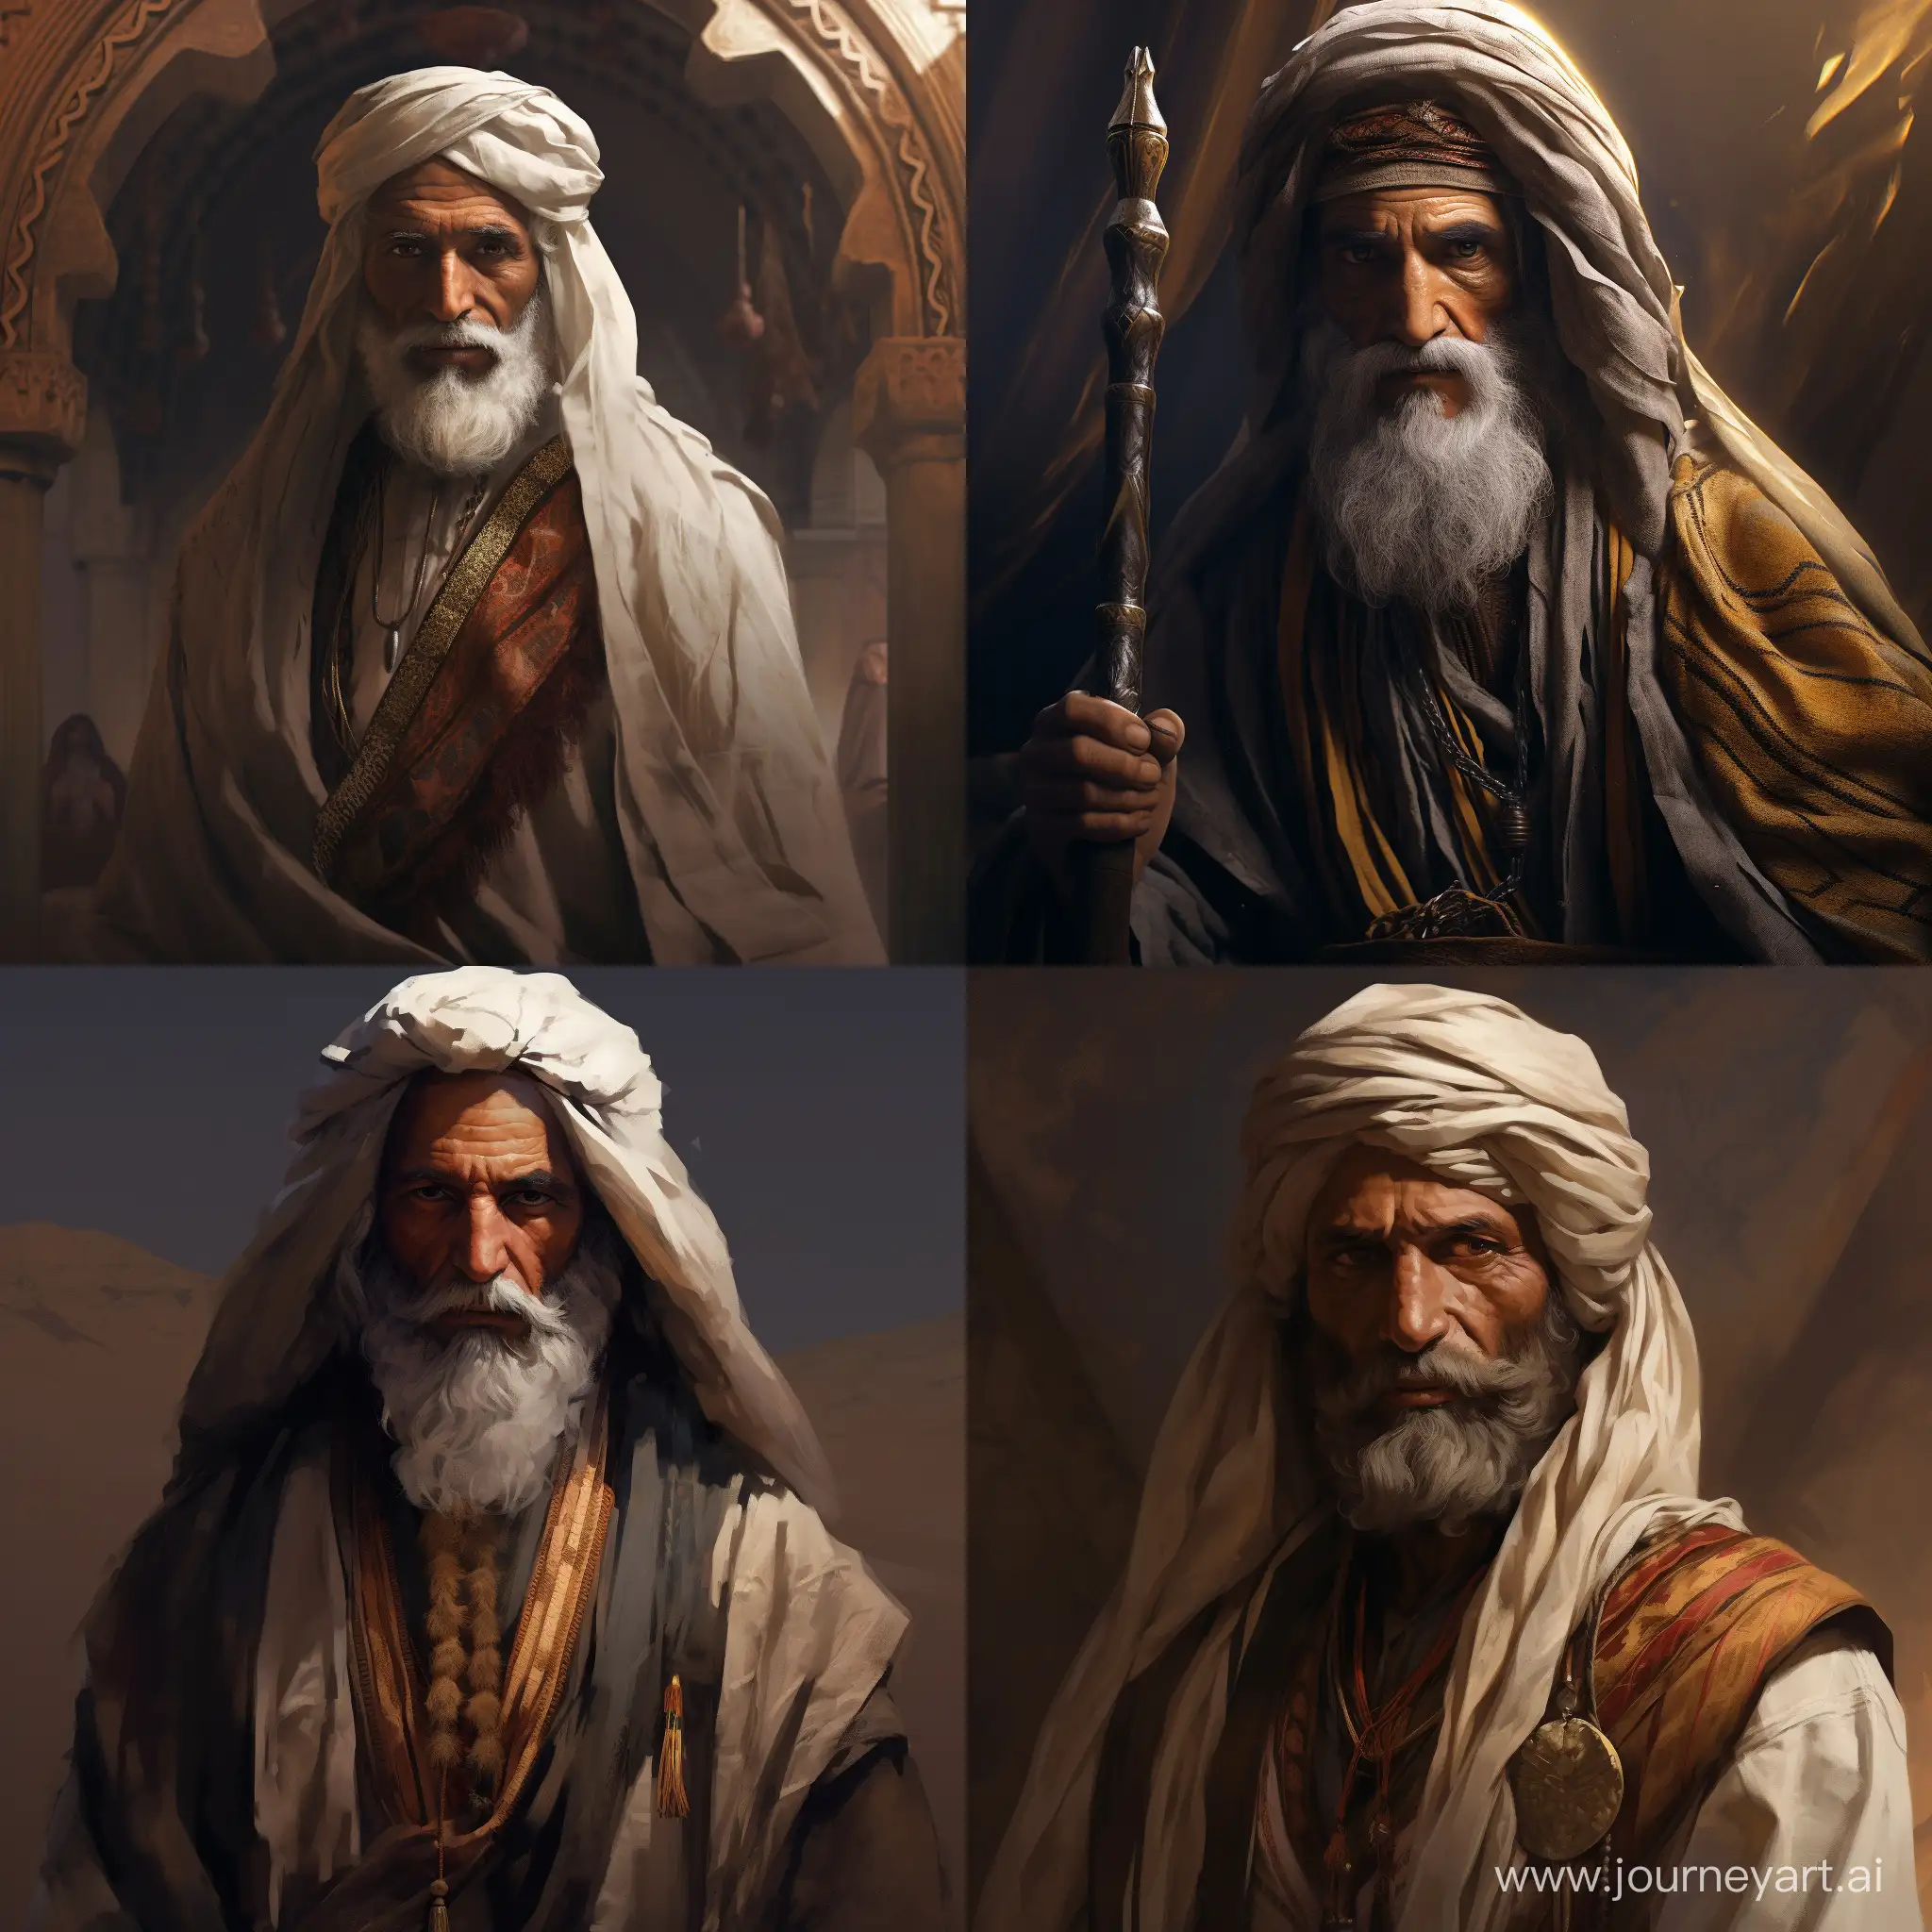 I want a character of an ancient Arab sage